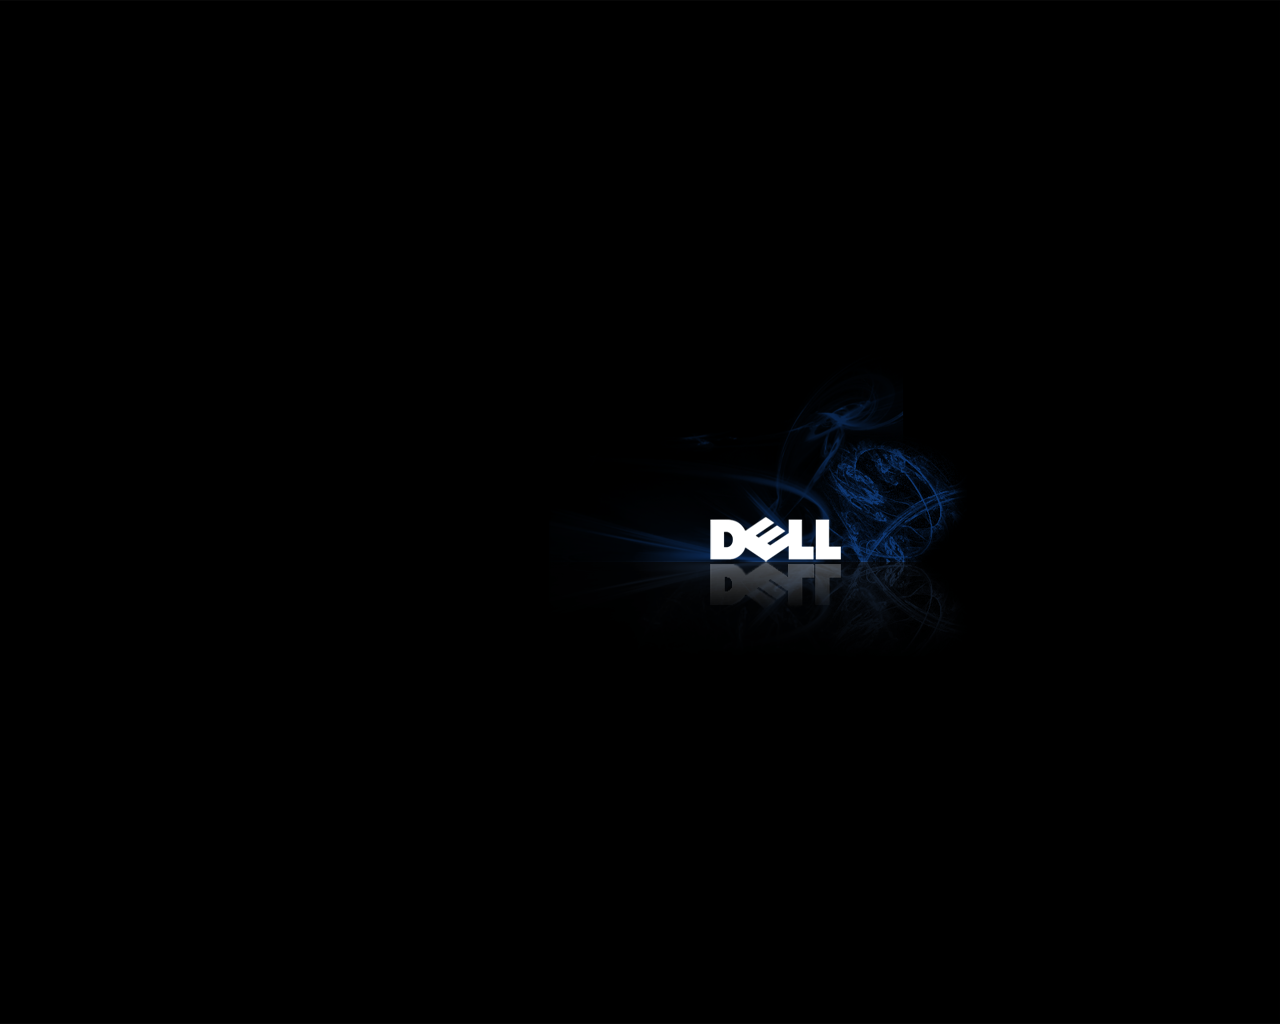 HD Wallpaper For Dell Laptop Dawallpaperz